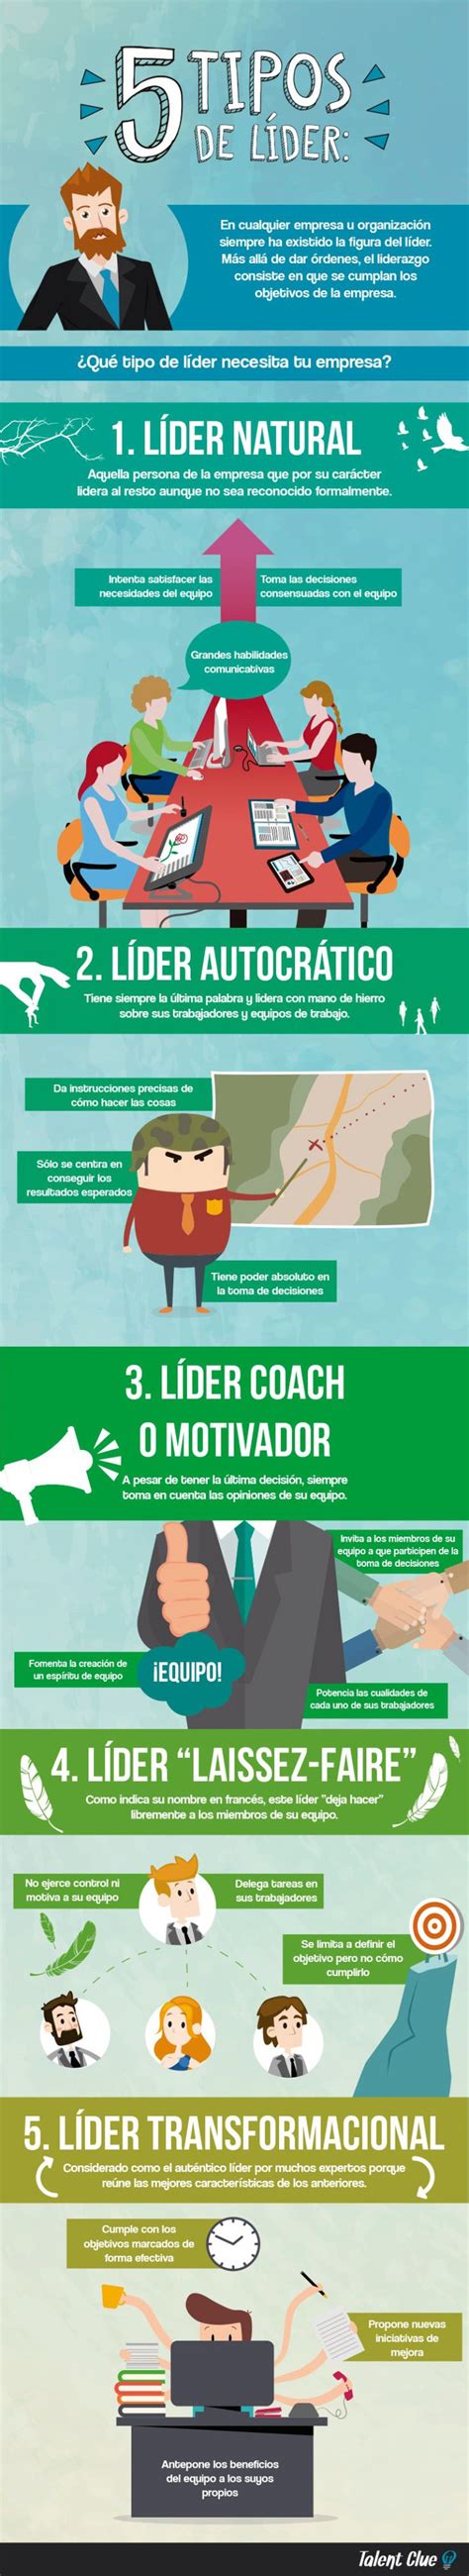 9 Caracteristicas De Un Lider Perfecto Infografia Infographic Images